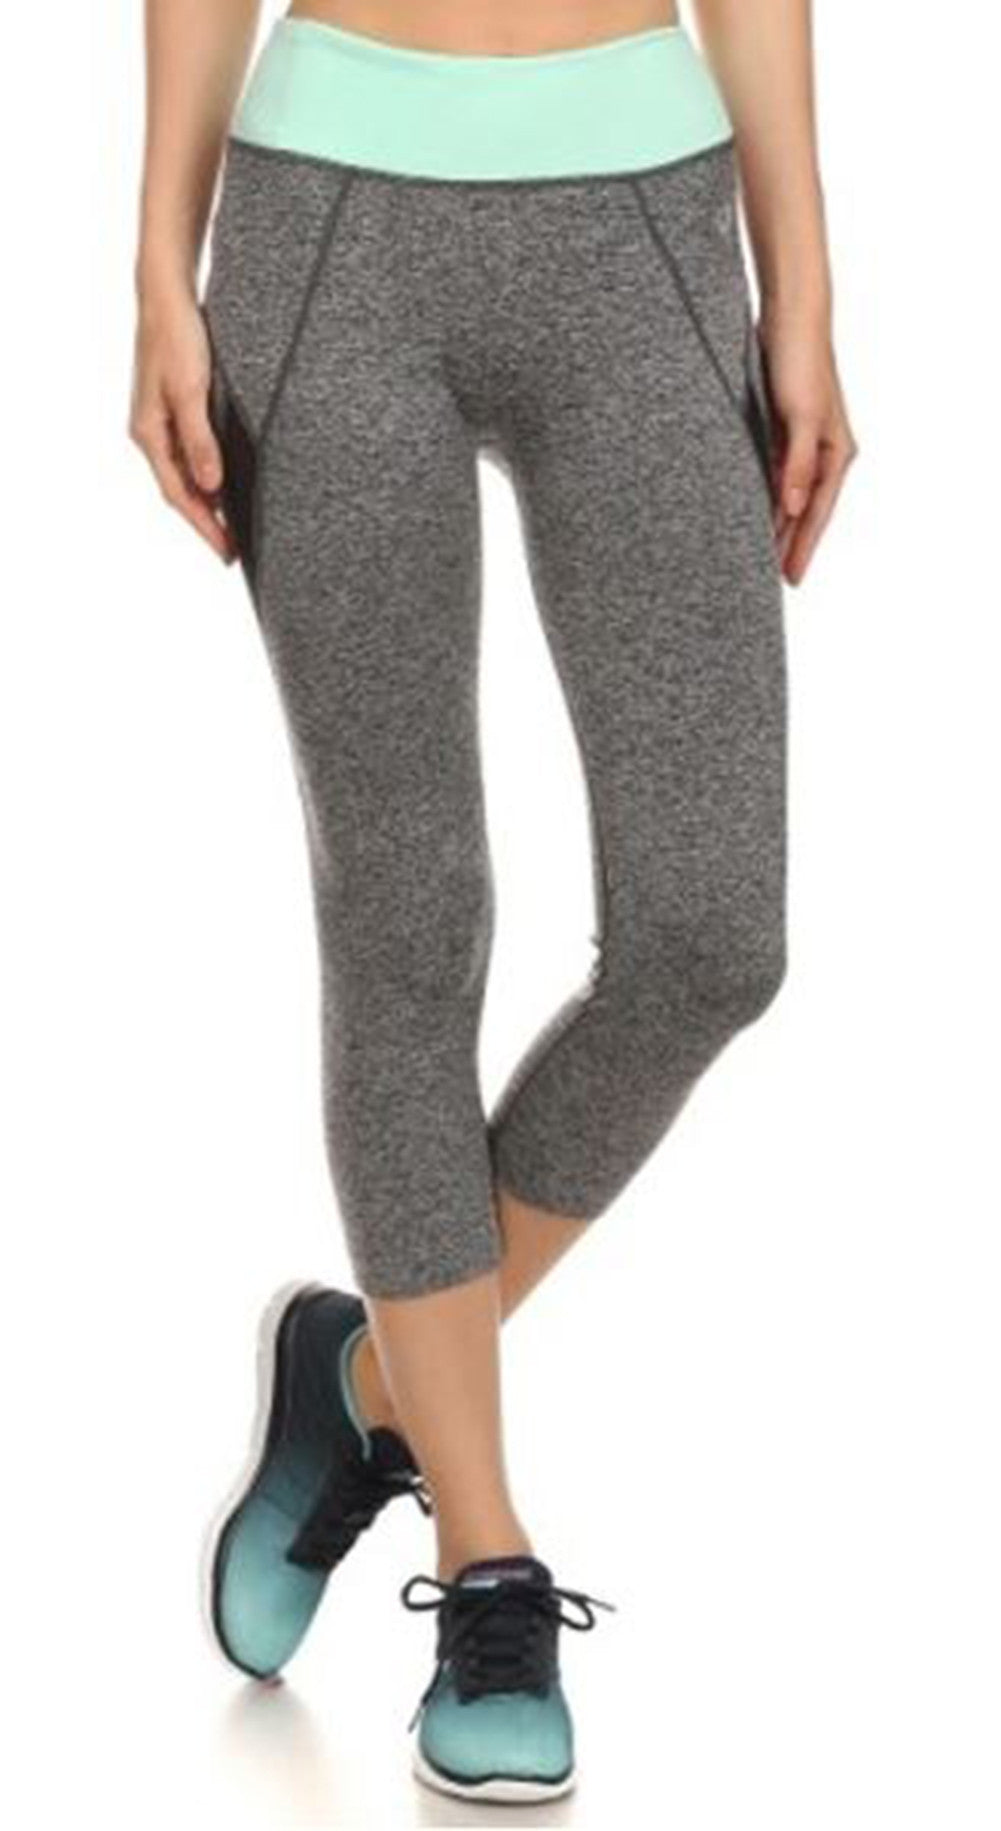 Fashionable Sporty Cropped Capri Workout Pants - Neon Nation